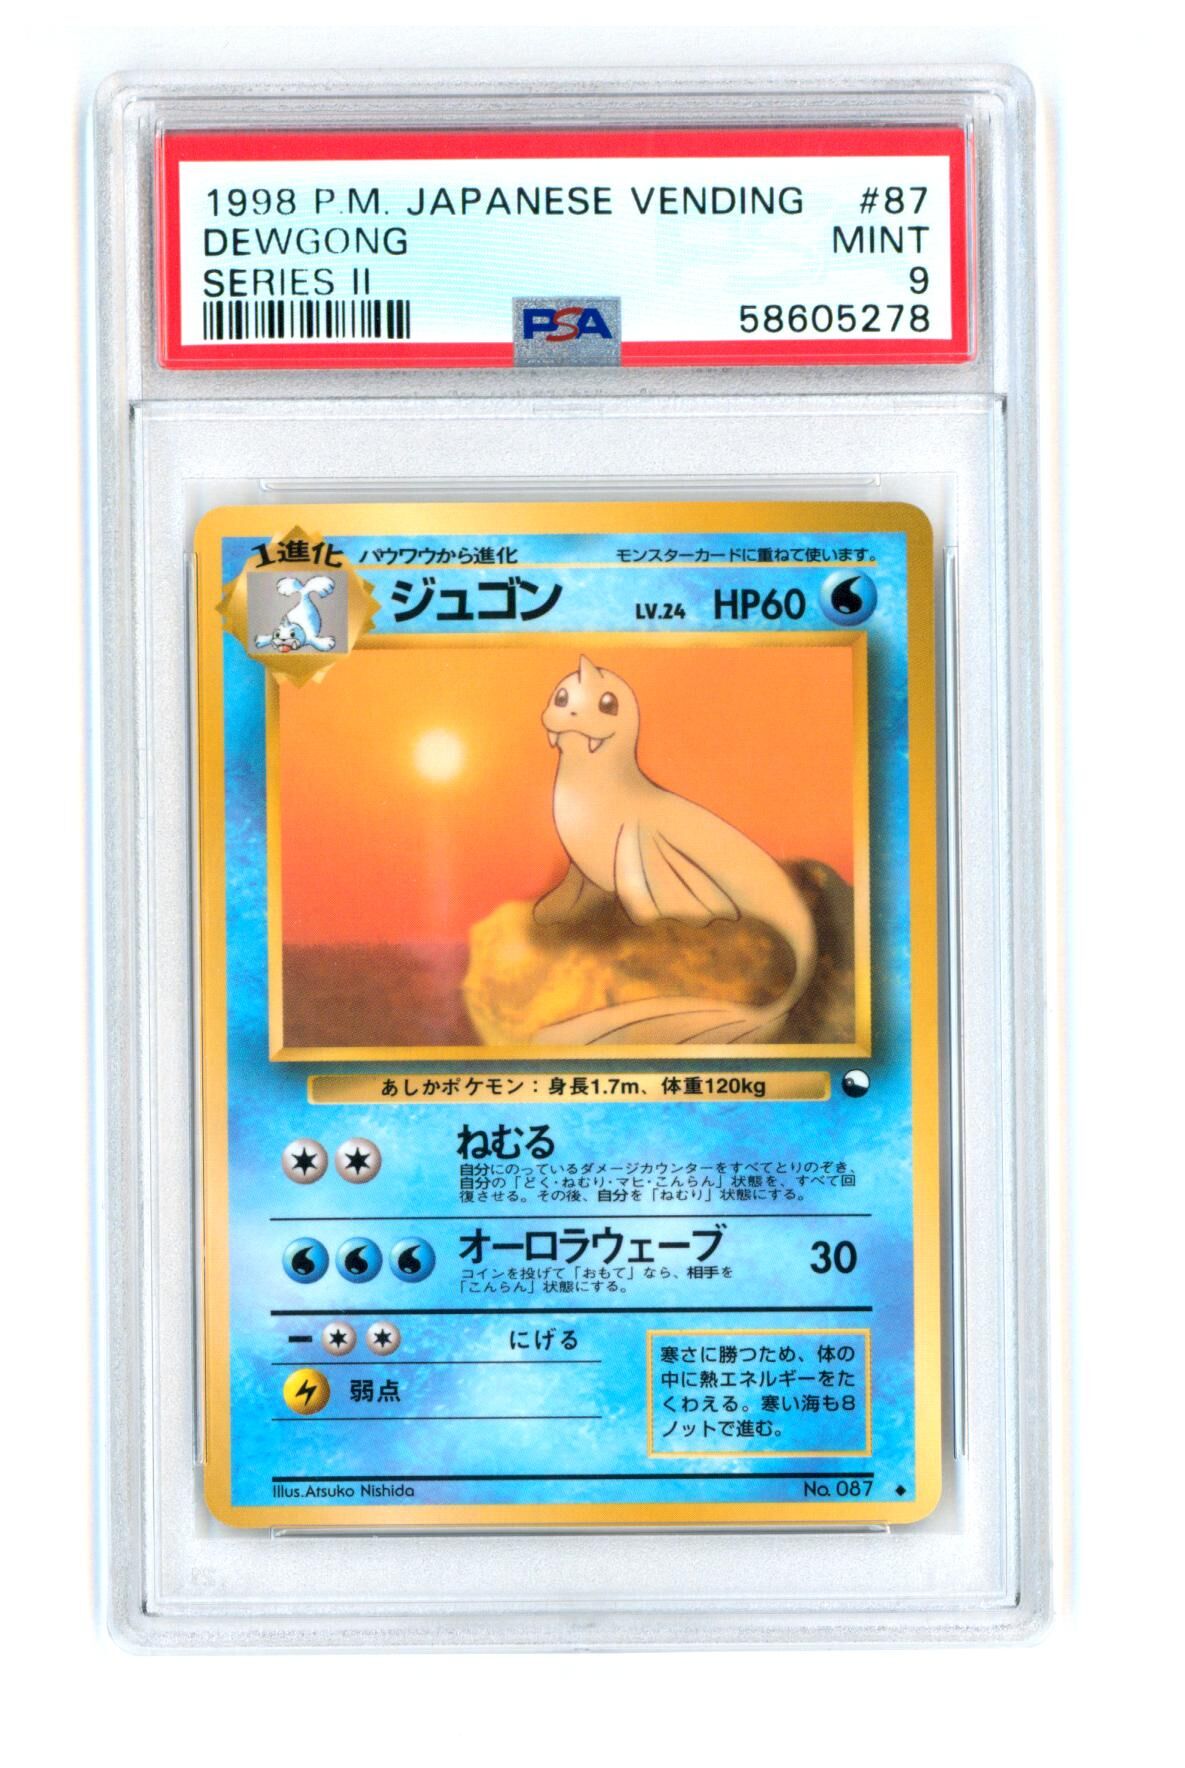 Dewgong #87 - Japanese Vending - Series 2 - PSA 9 MINT - Pokémon